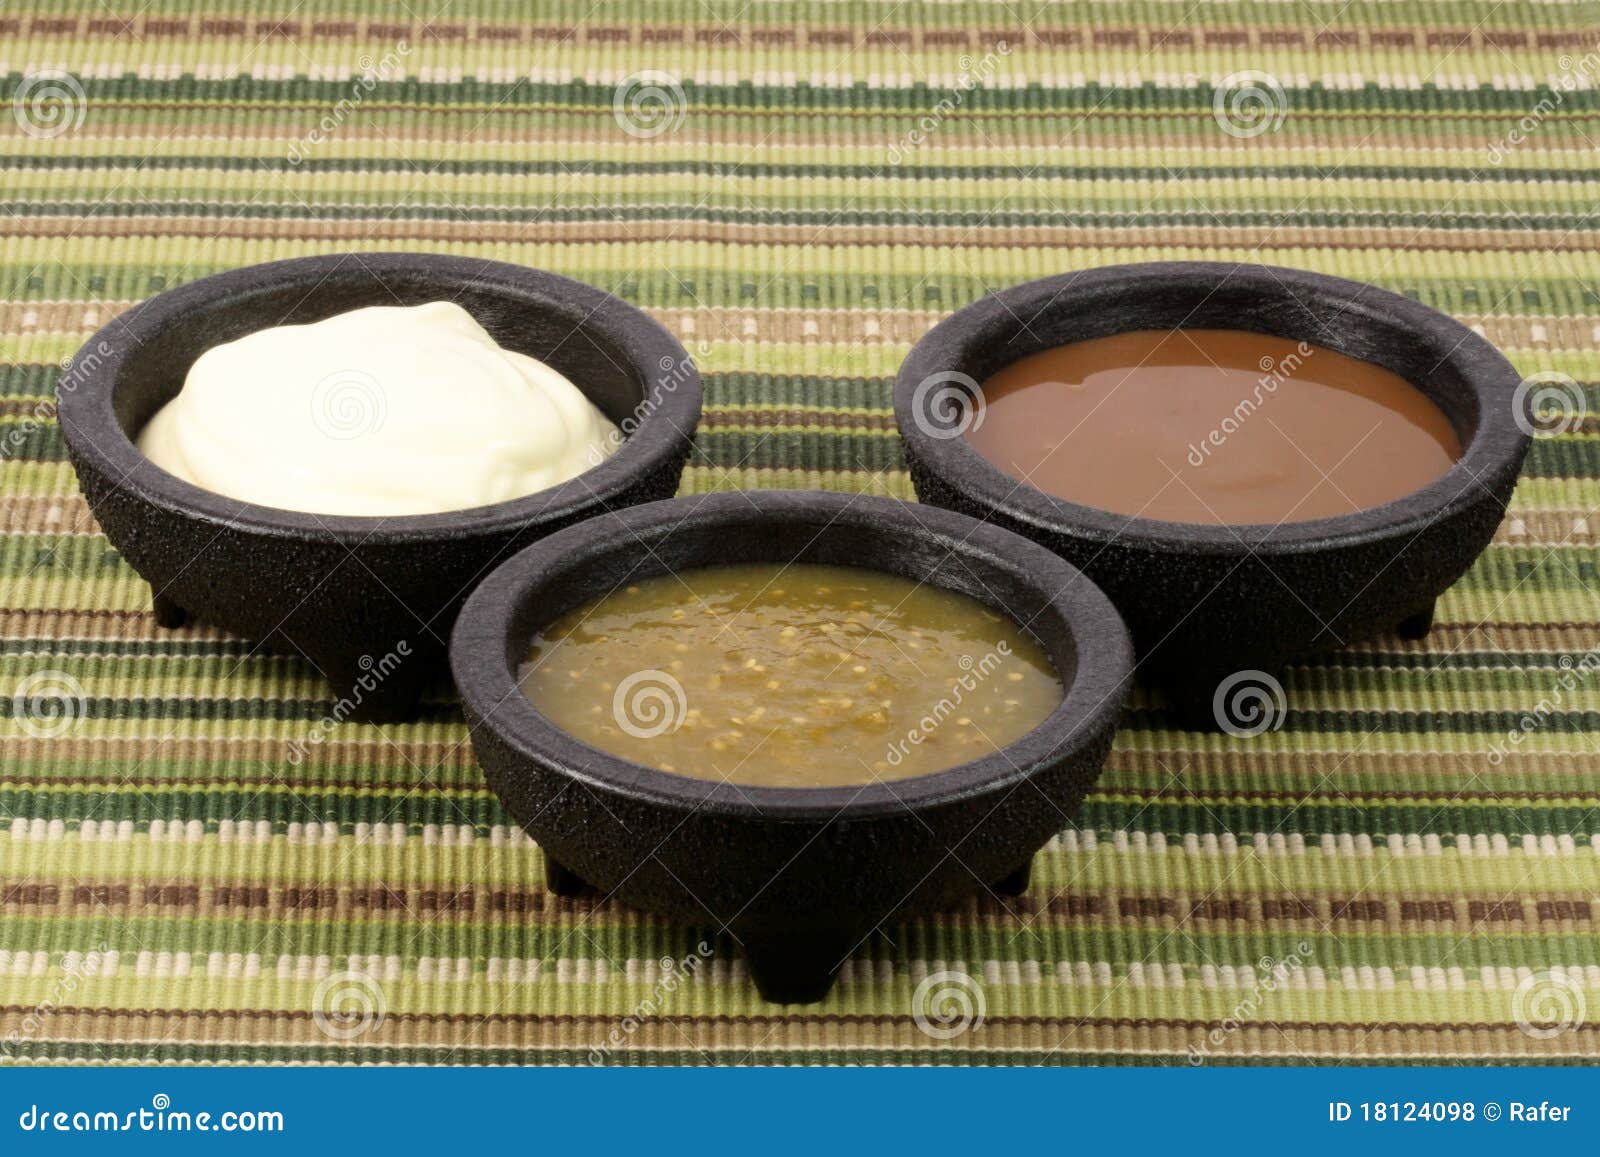 salsa verde,salsa roja and sour cream